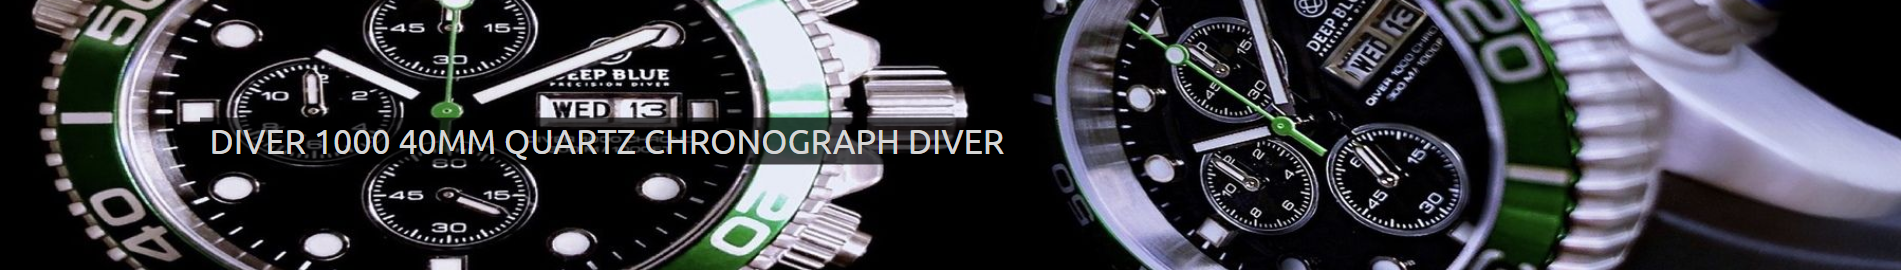 DIVER-1000-40MM-QUARTZ-CHRONOGRAPH-DIVER